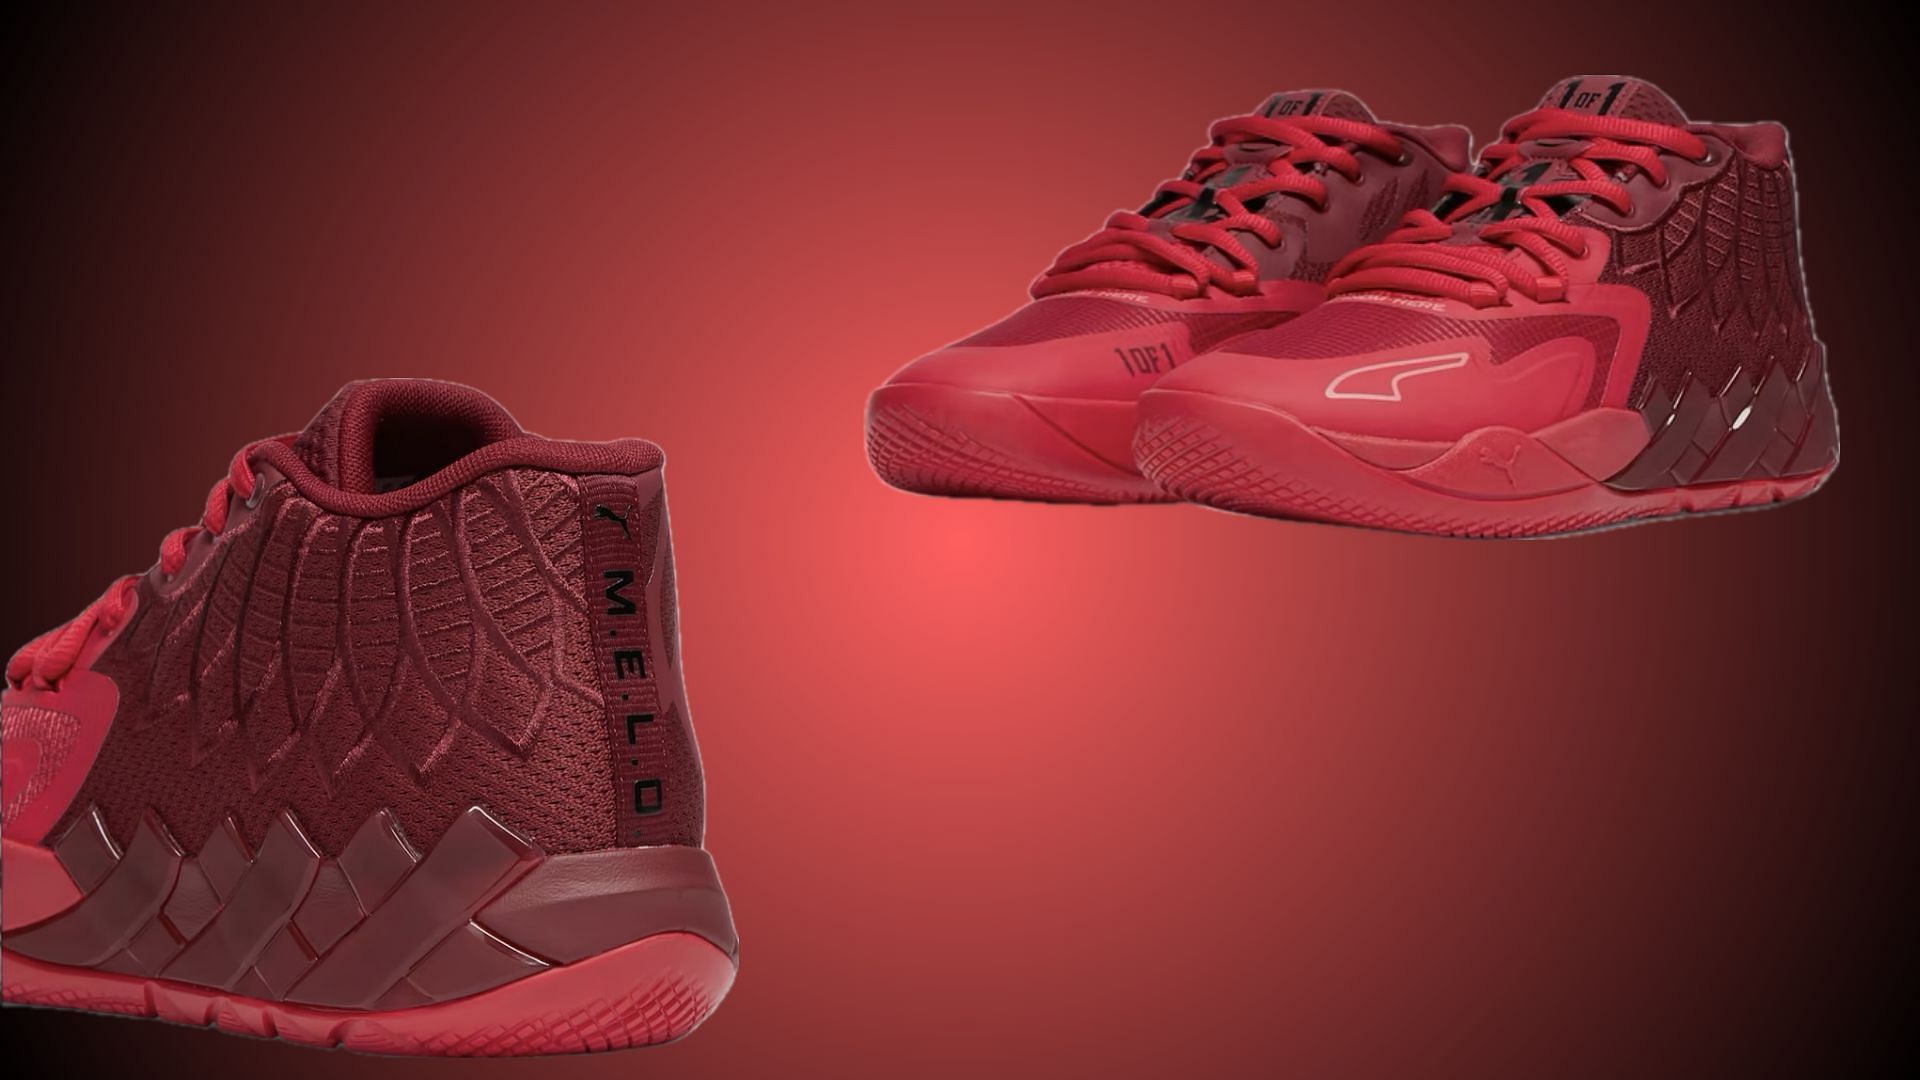 LaMelo Ball x PUMA MB.01 Intense Red sneakers (Image via PUMA)